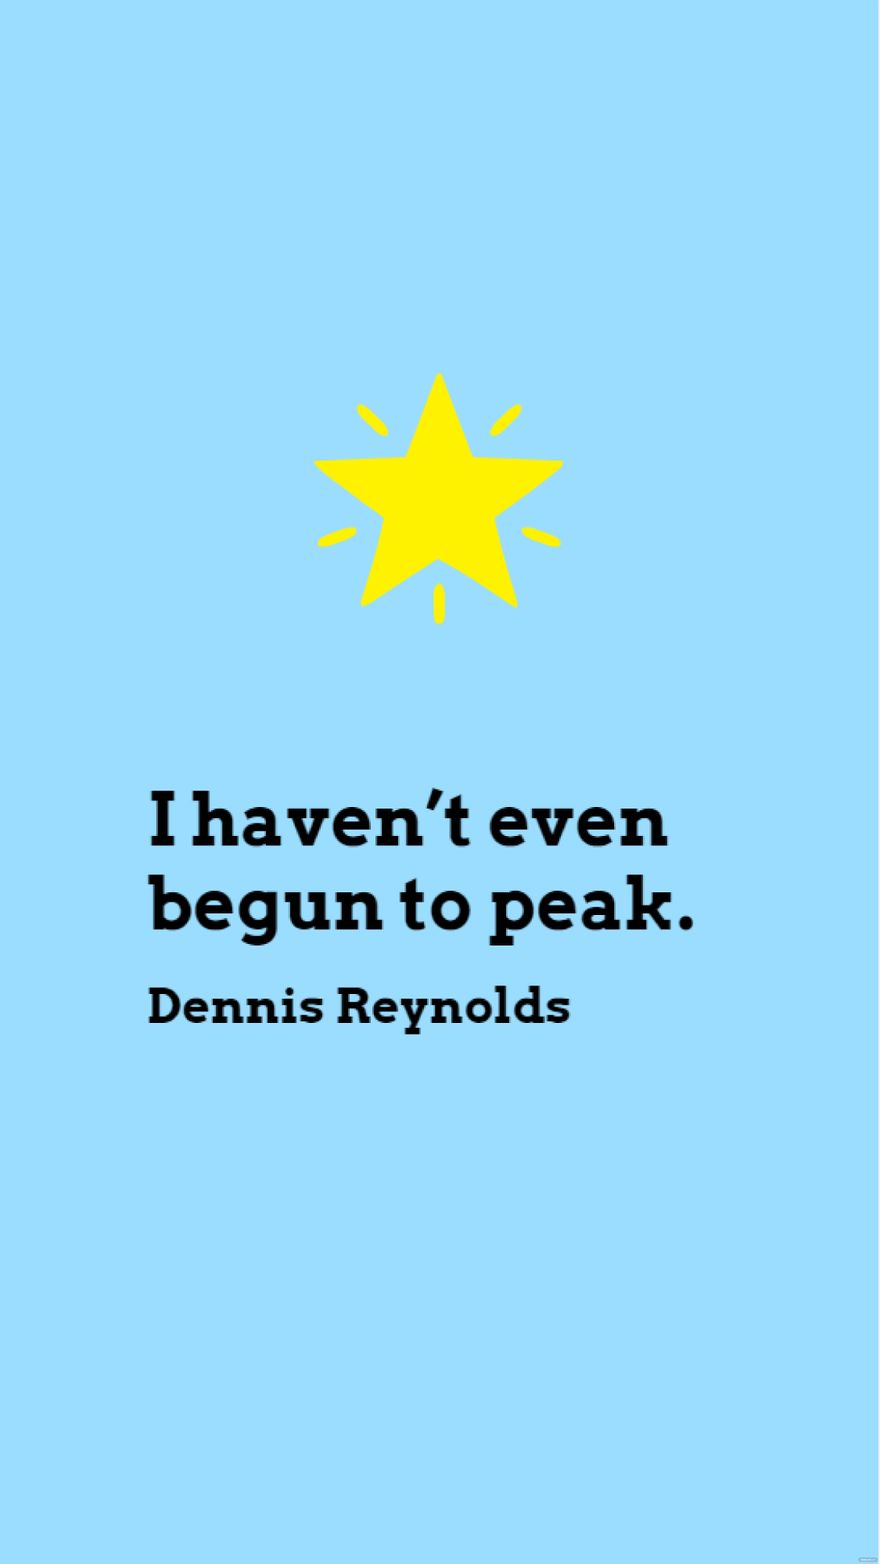 Free Dennis Reynolds - I haven’t even begun to peak. in JPG